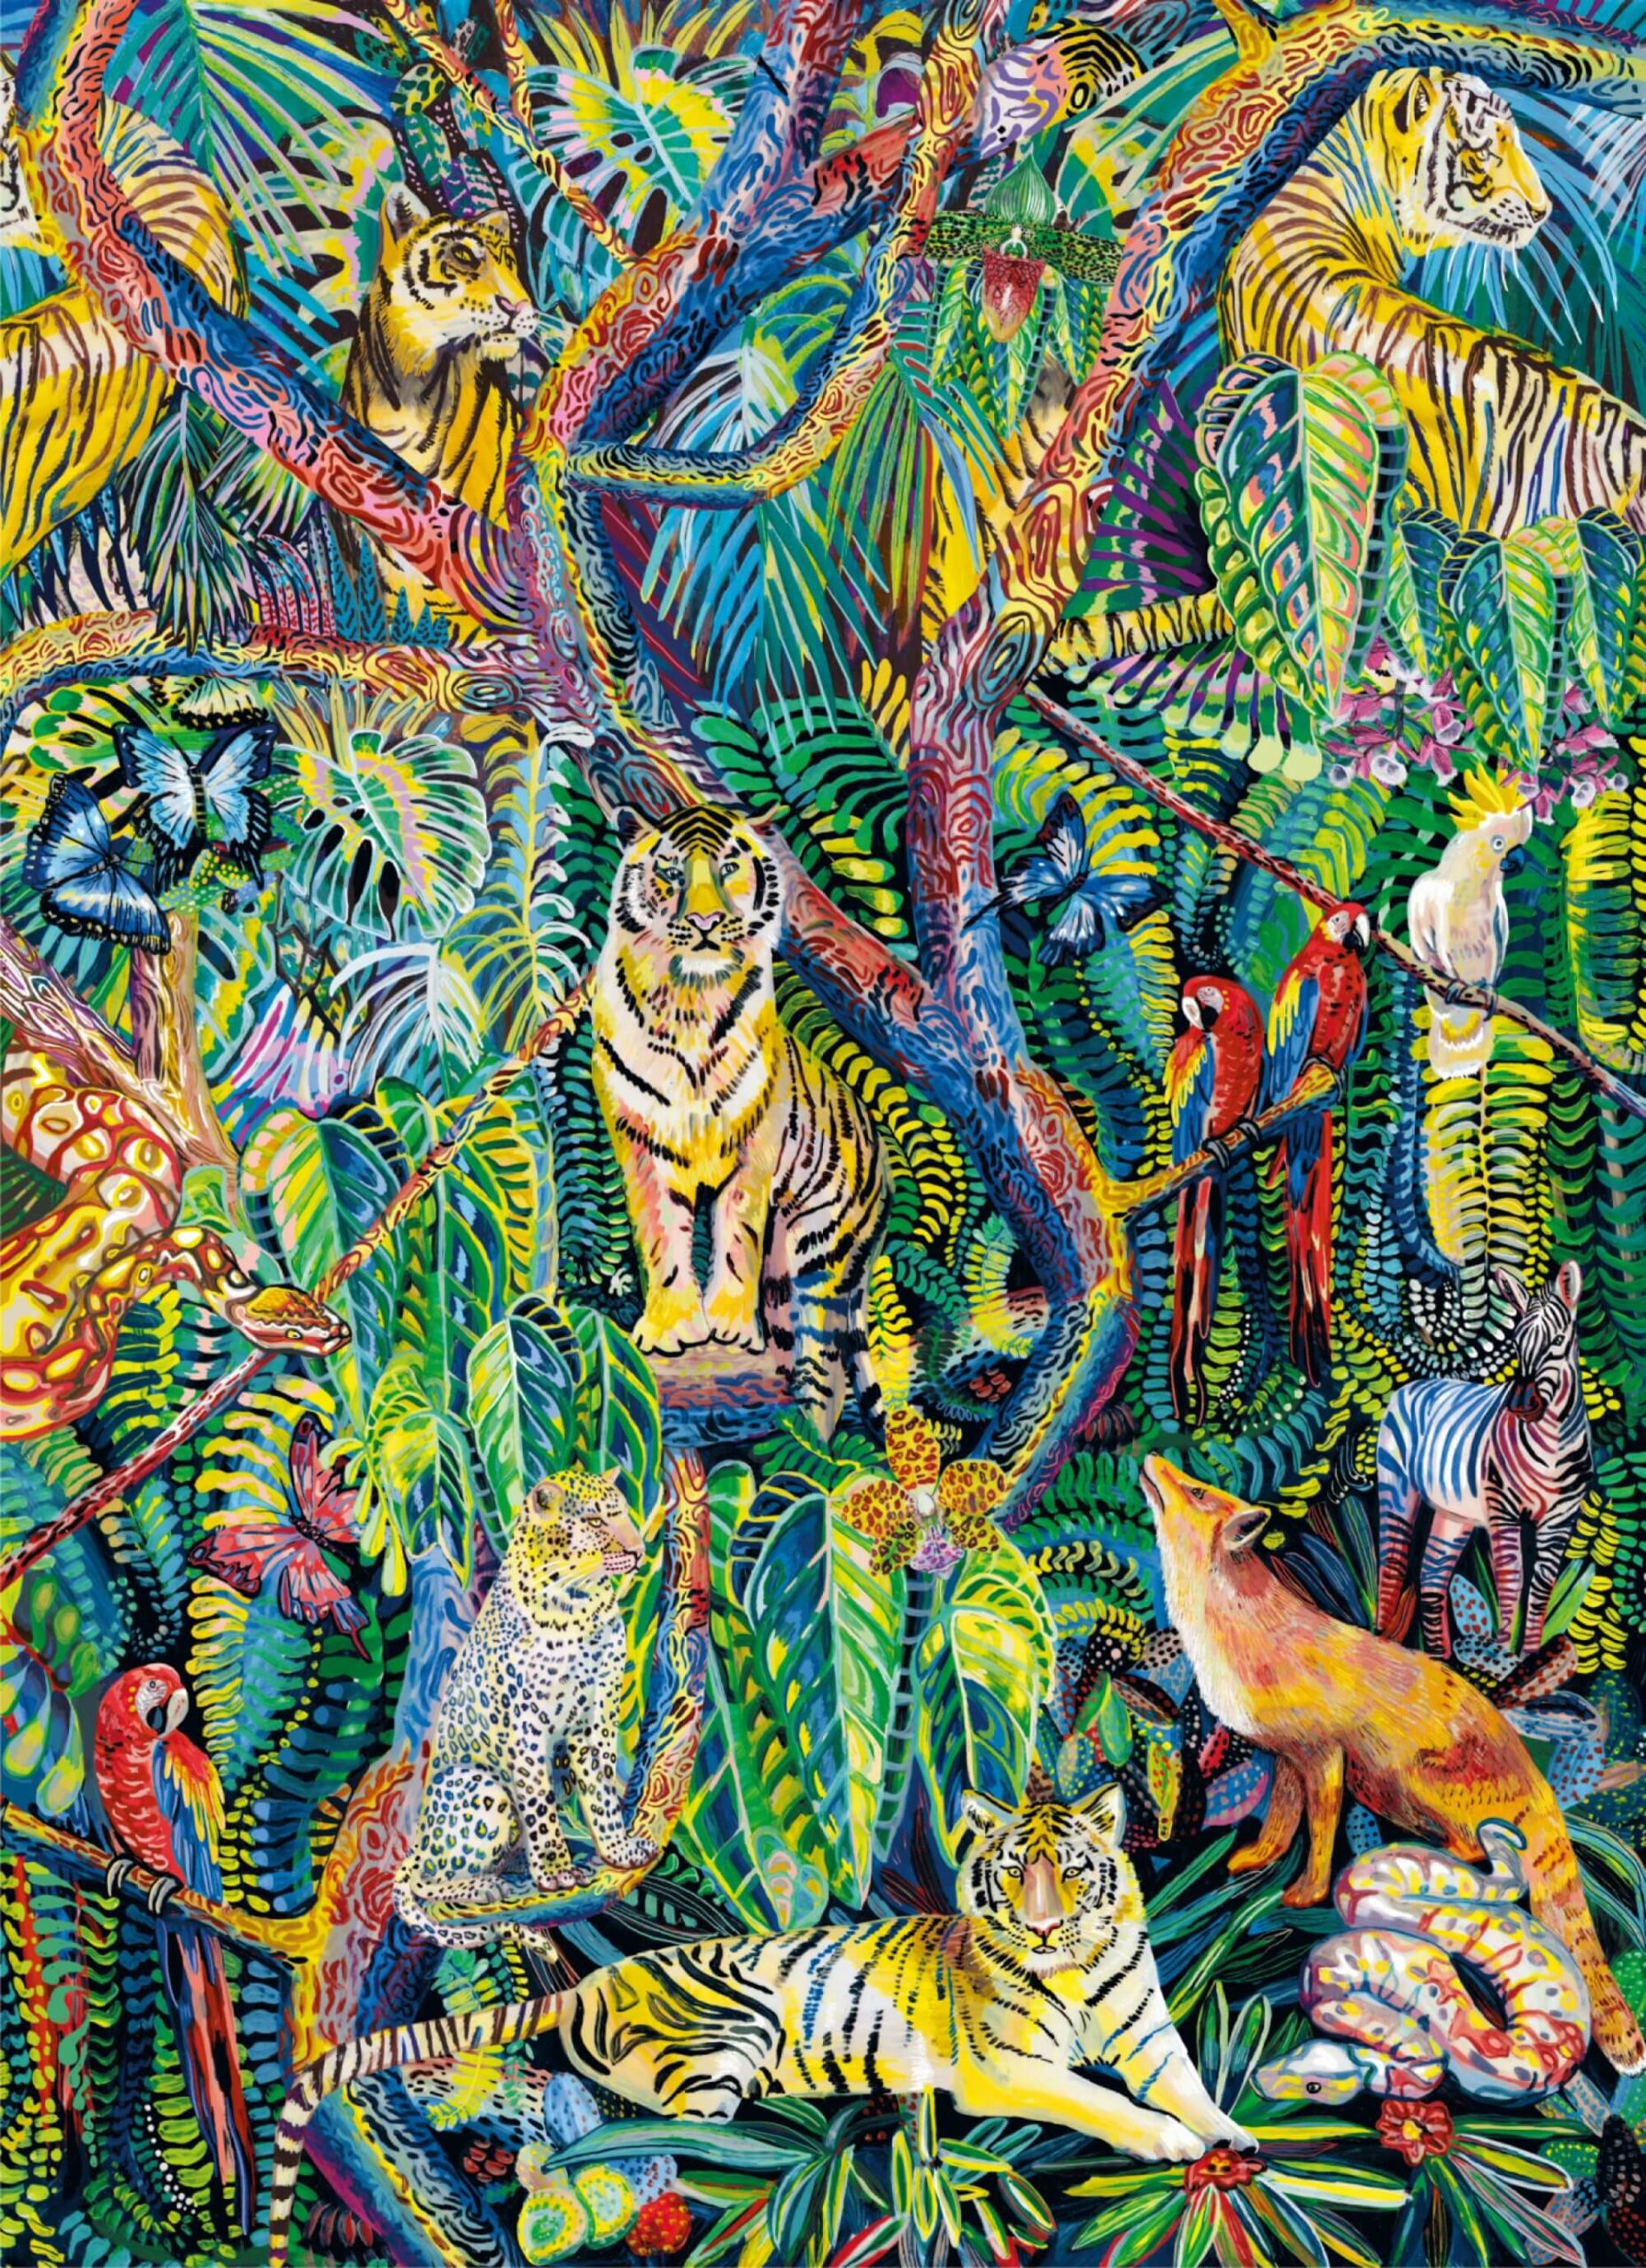 Marina Friedrich: Jungle, 2021, 53 x 73 cm, Giclée on Fine Art Paper